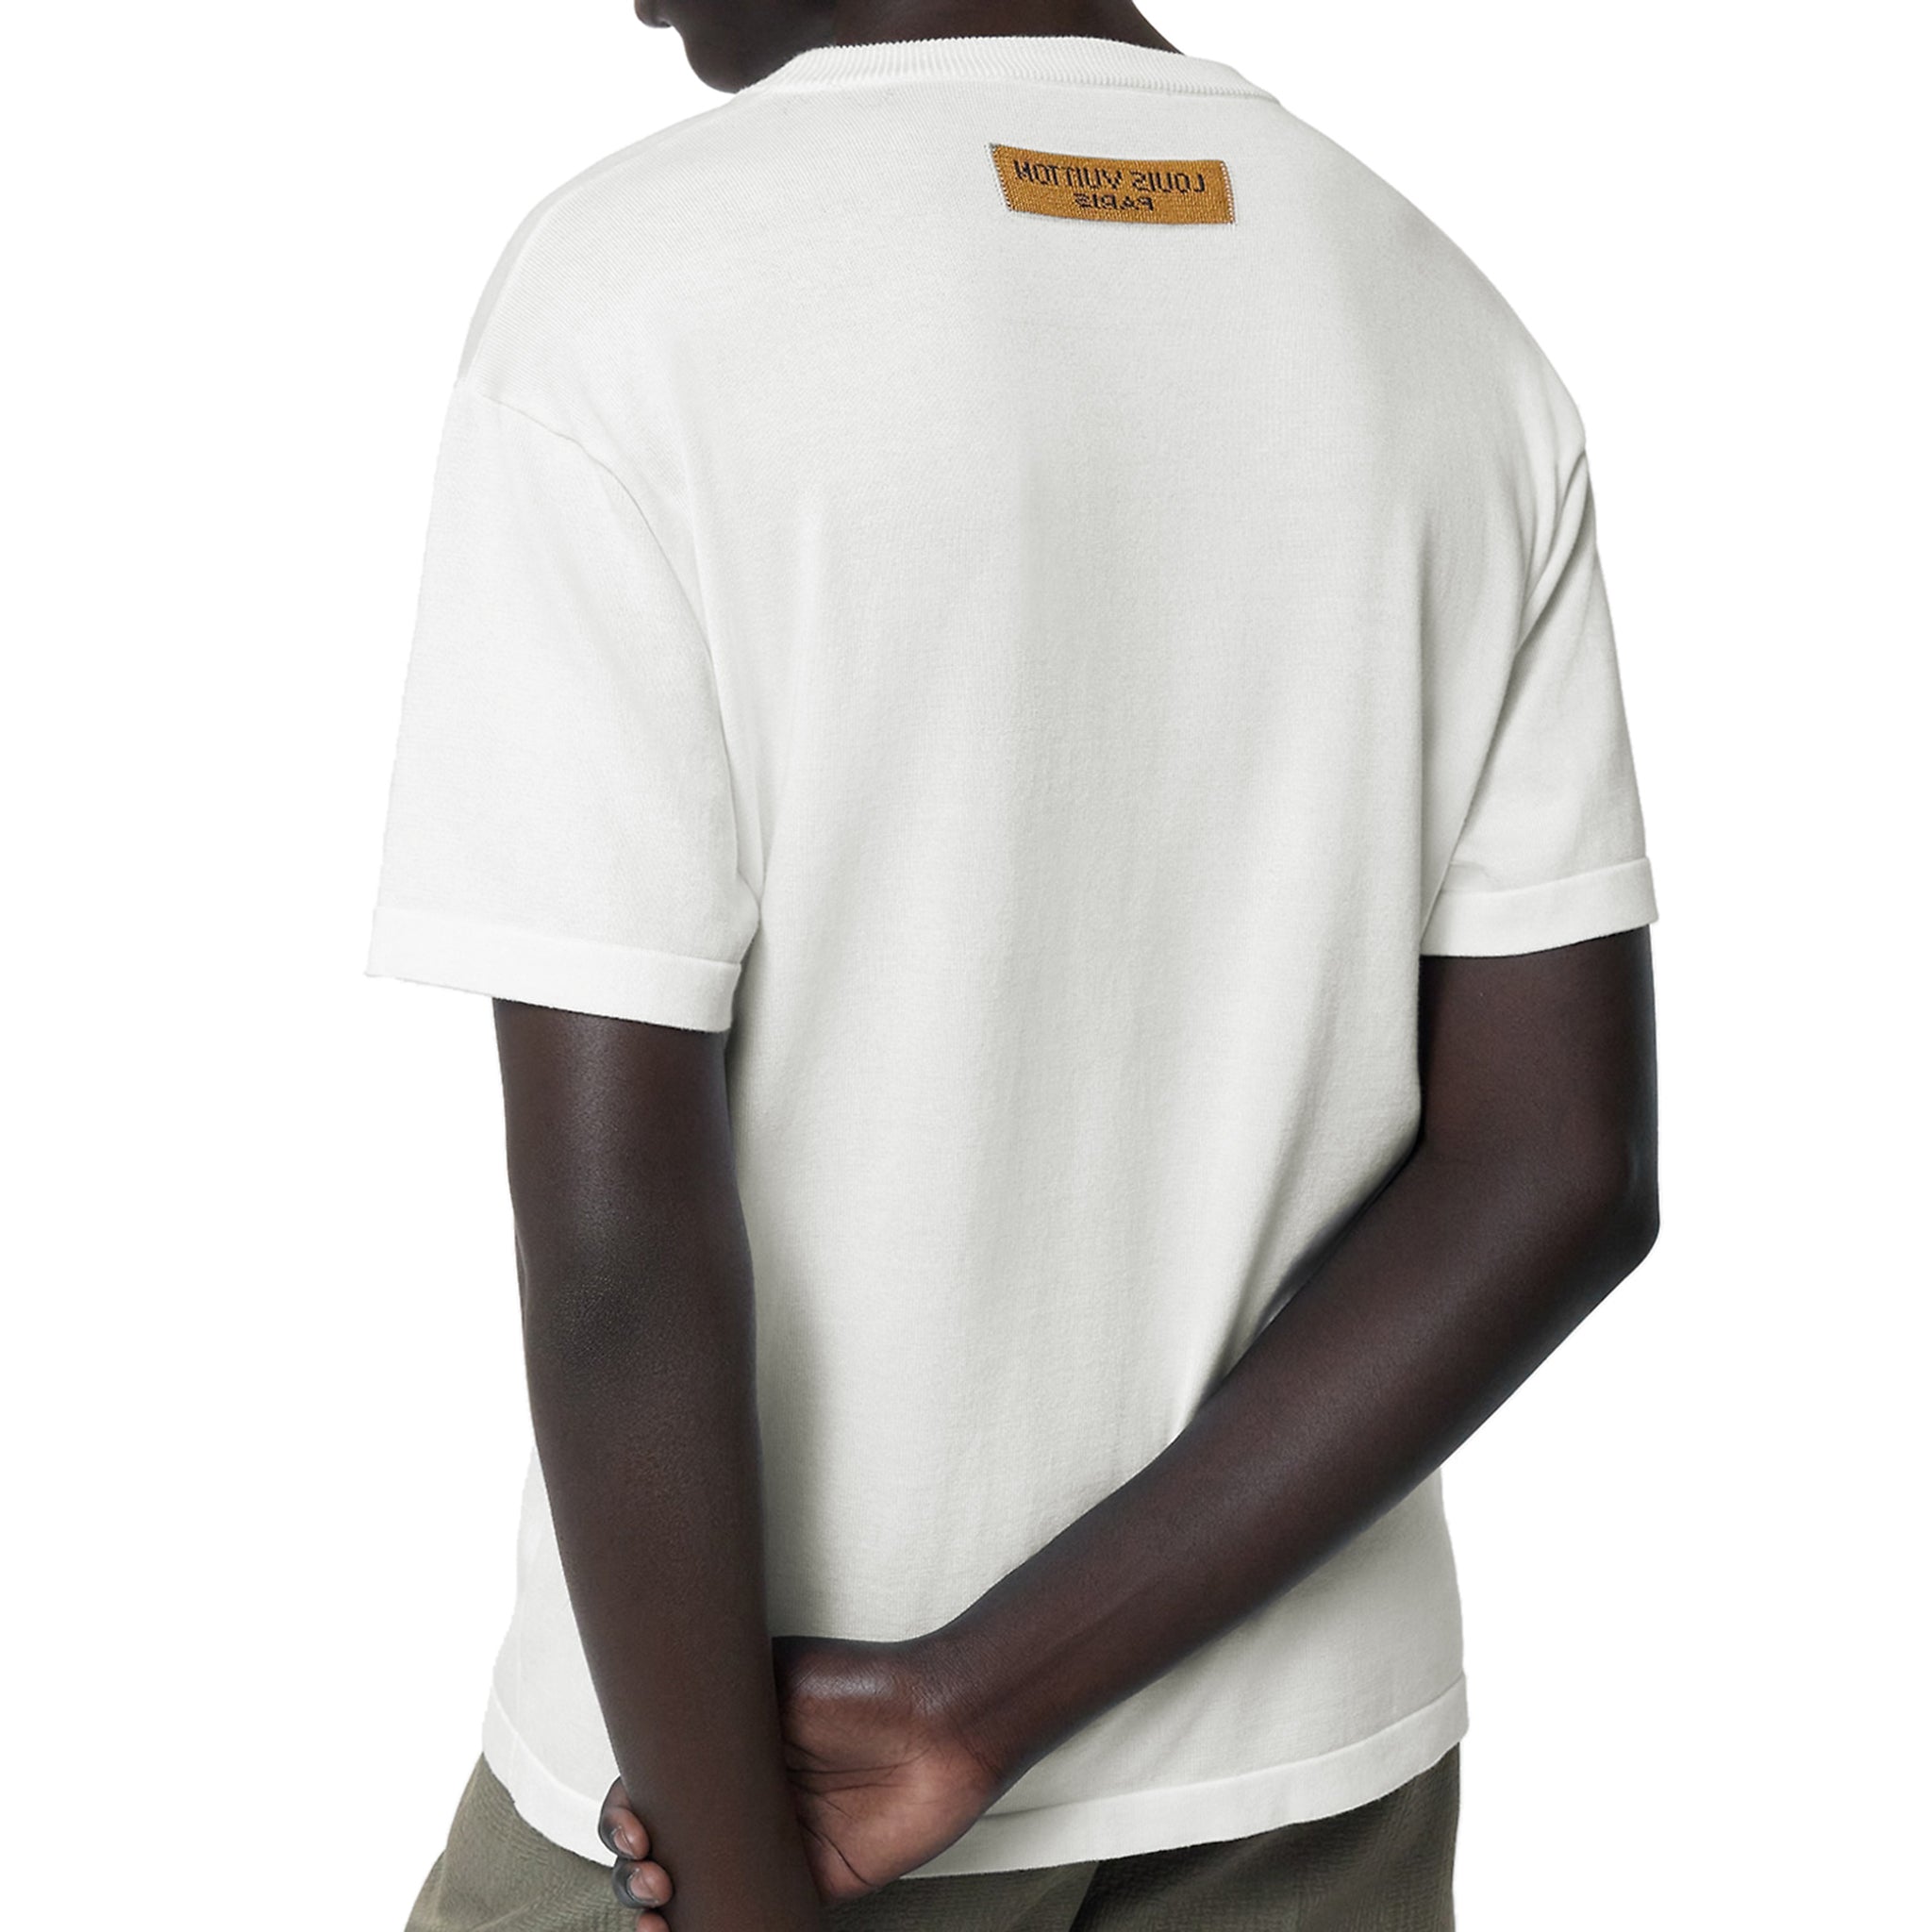 Louis Vuitton Printed Cotton T-Shirt Milk White. Size Xs